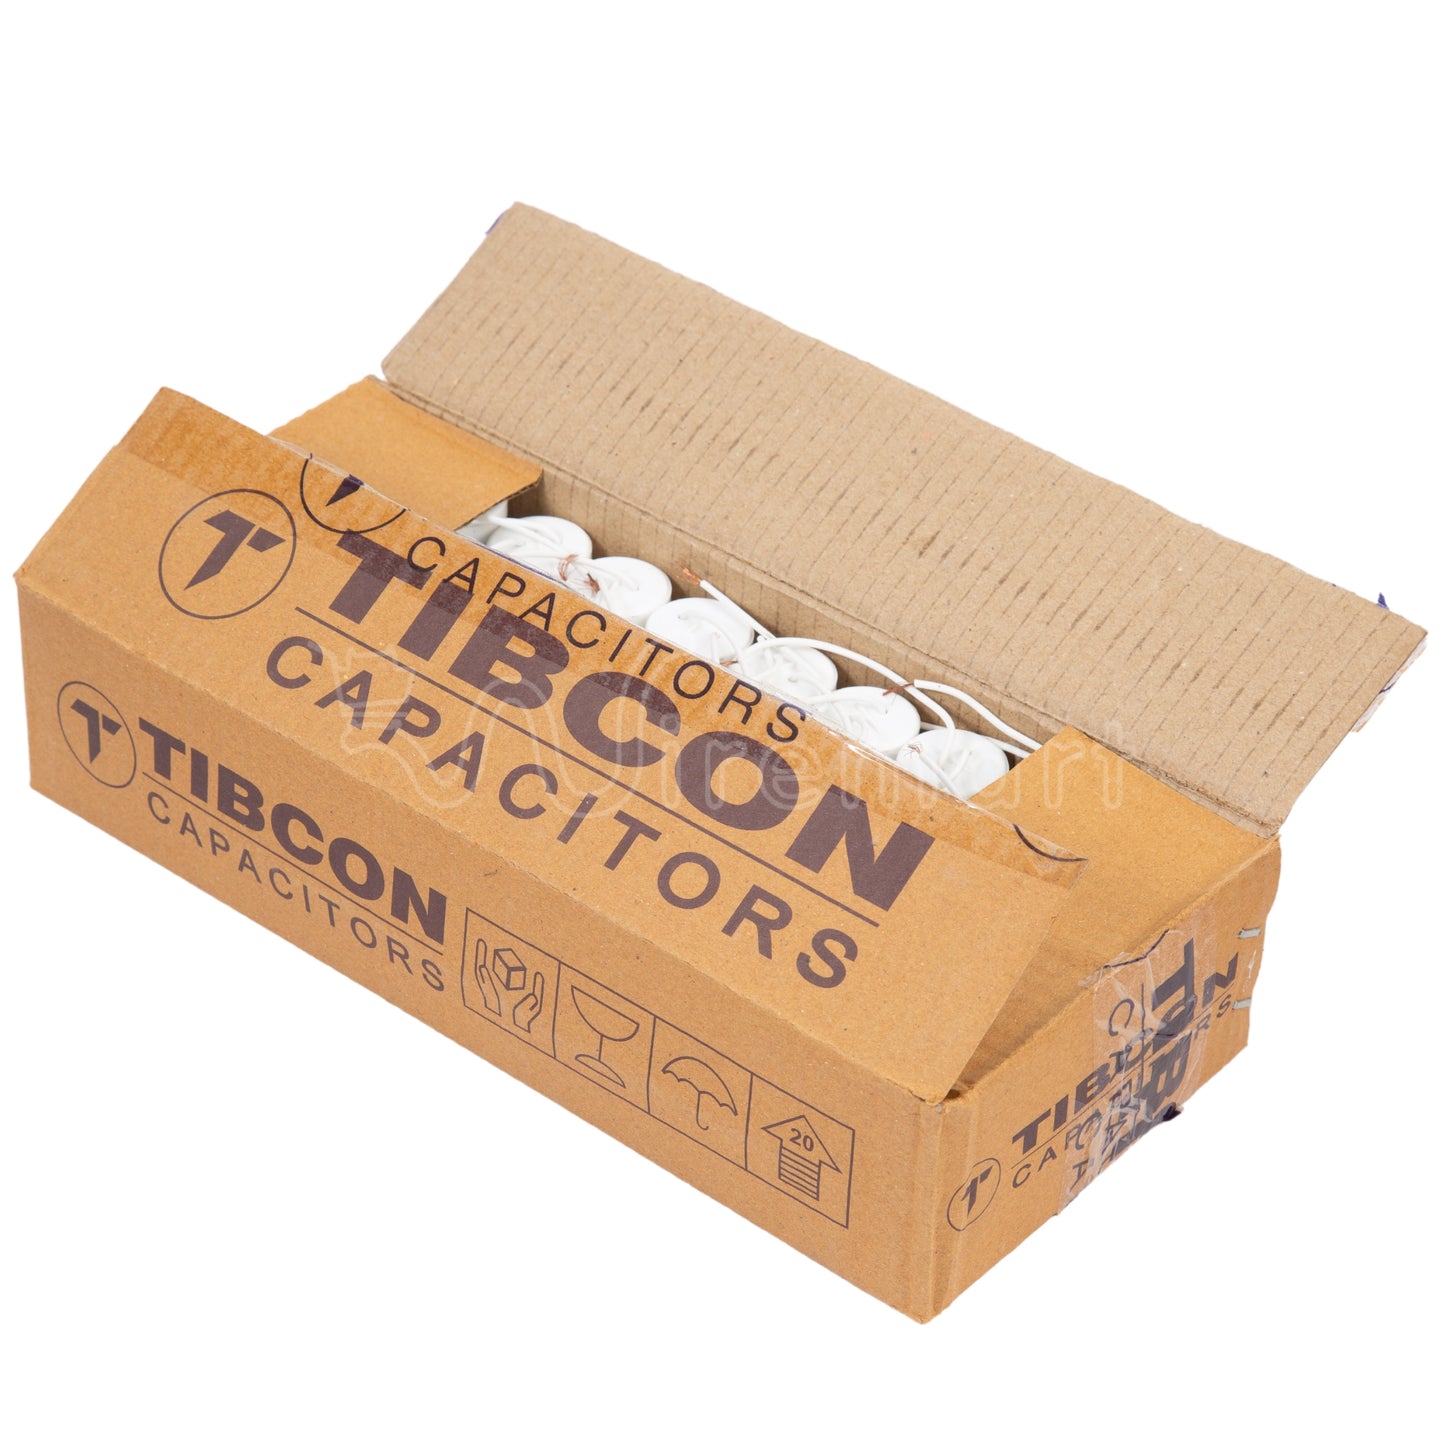 Tibcon फैन कैपेसिटर 2.5 MFD (ऑयल टाइप) - हाई क्वालिटी फैन कैपेसिटर - 50 पीस बॉक्स